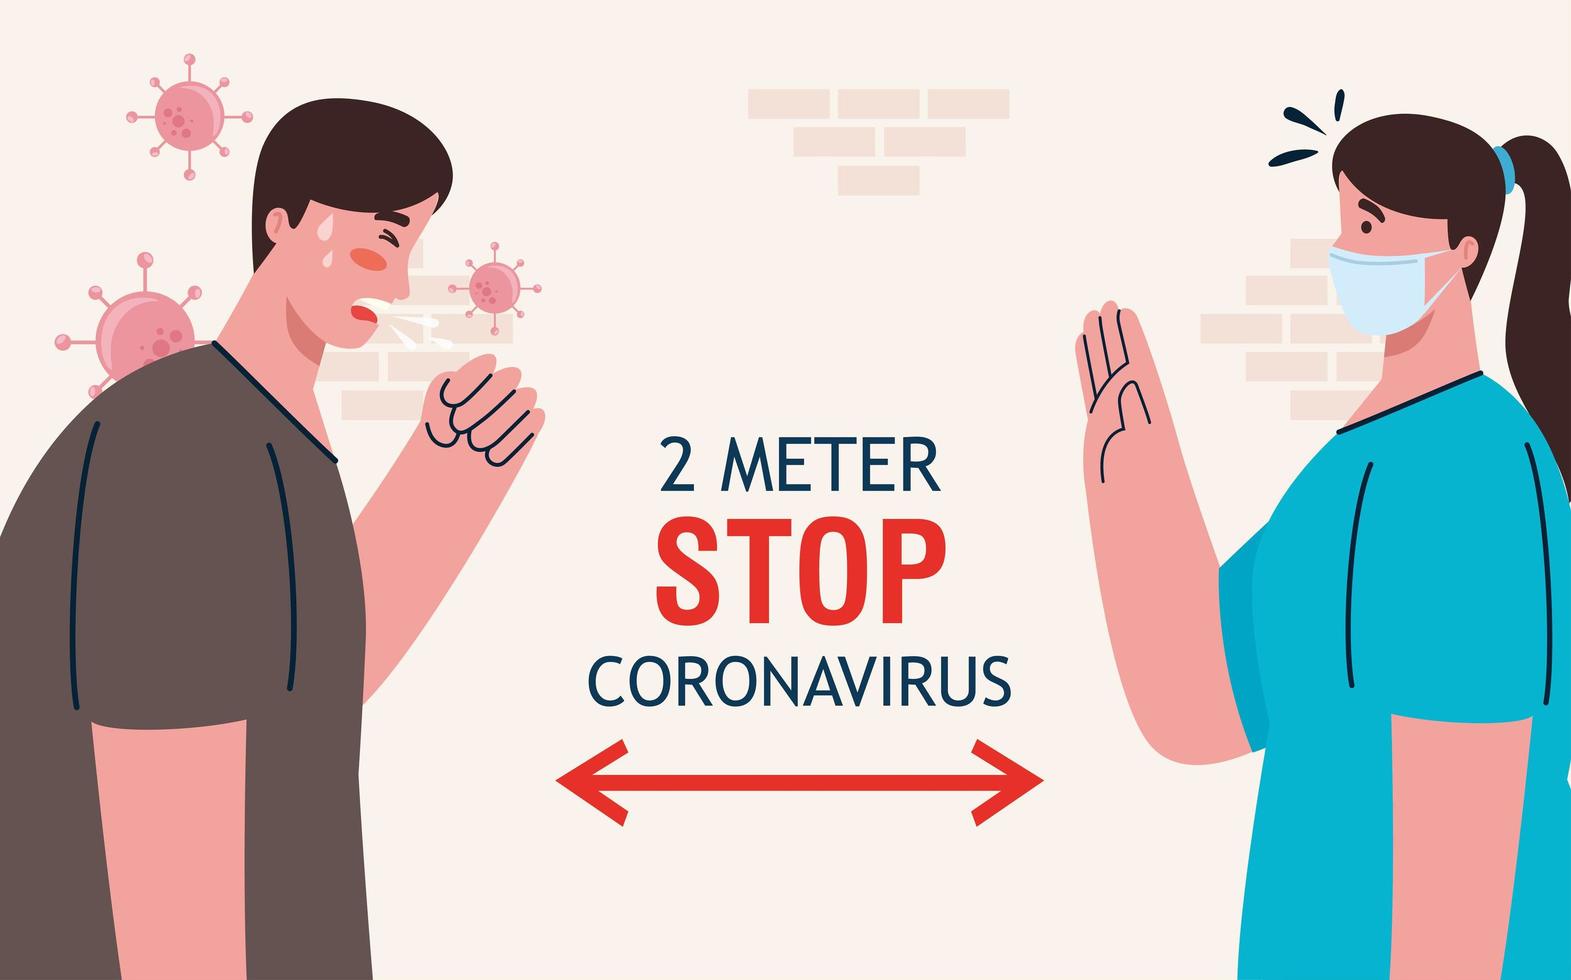 distanciamento social, pare o coronavírus a dois metros de distância, mantenha distância na sociedade pública para proteger as pessoas do covid 19, casal usando máscara médica contra coronavírus vetor